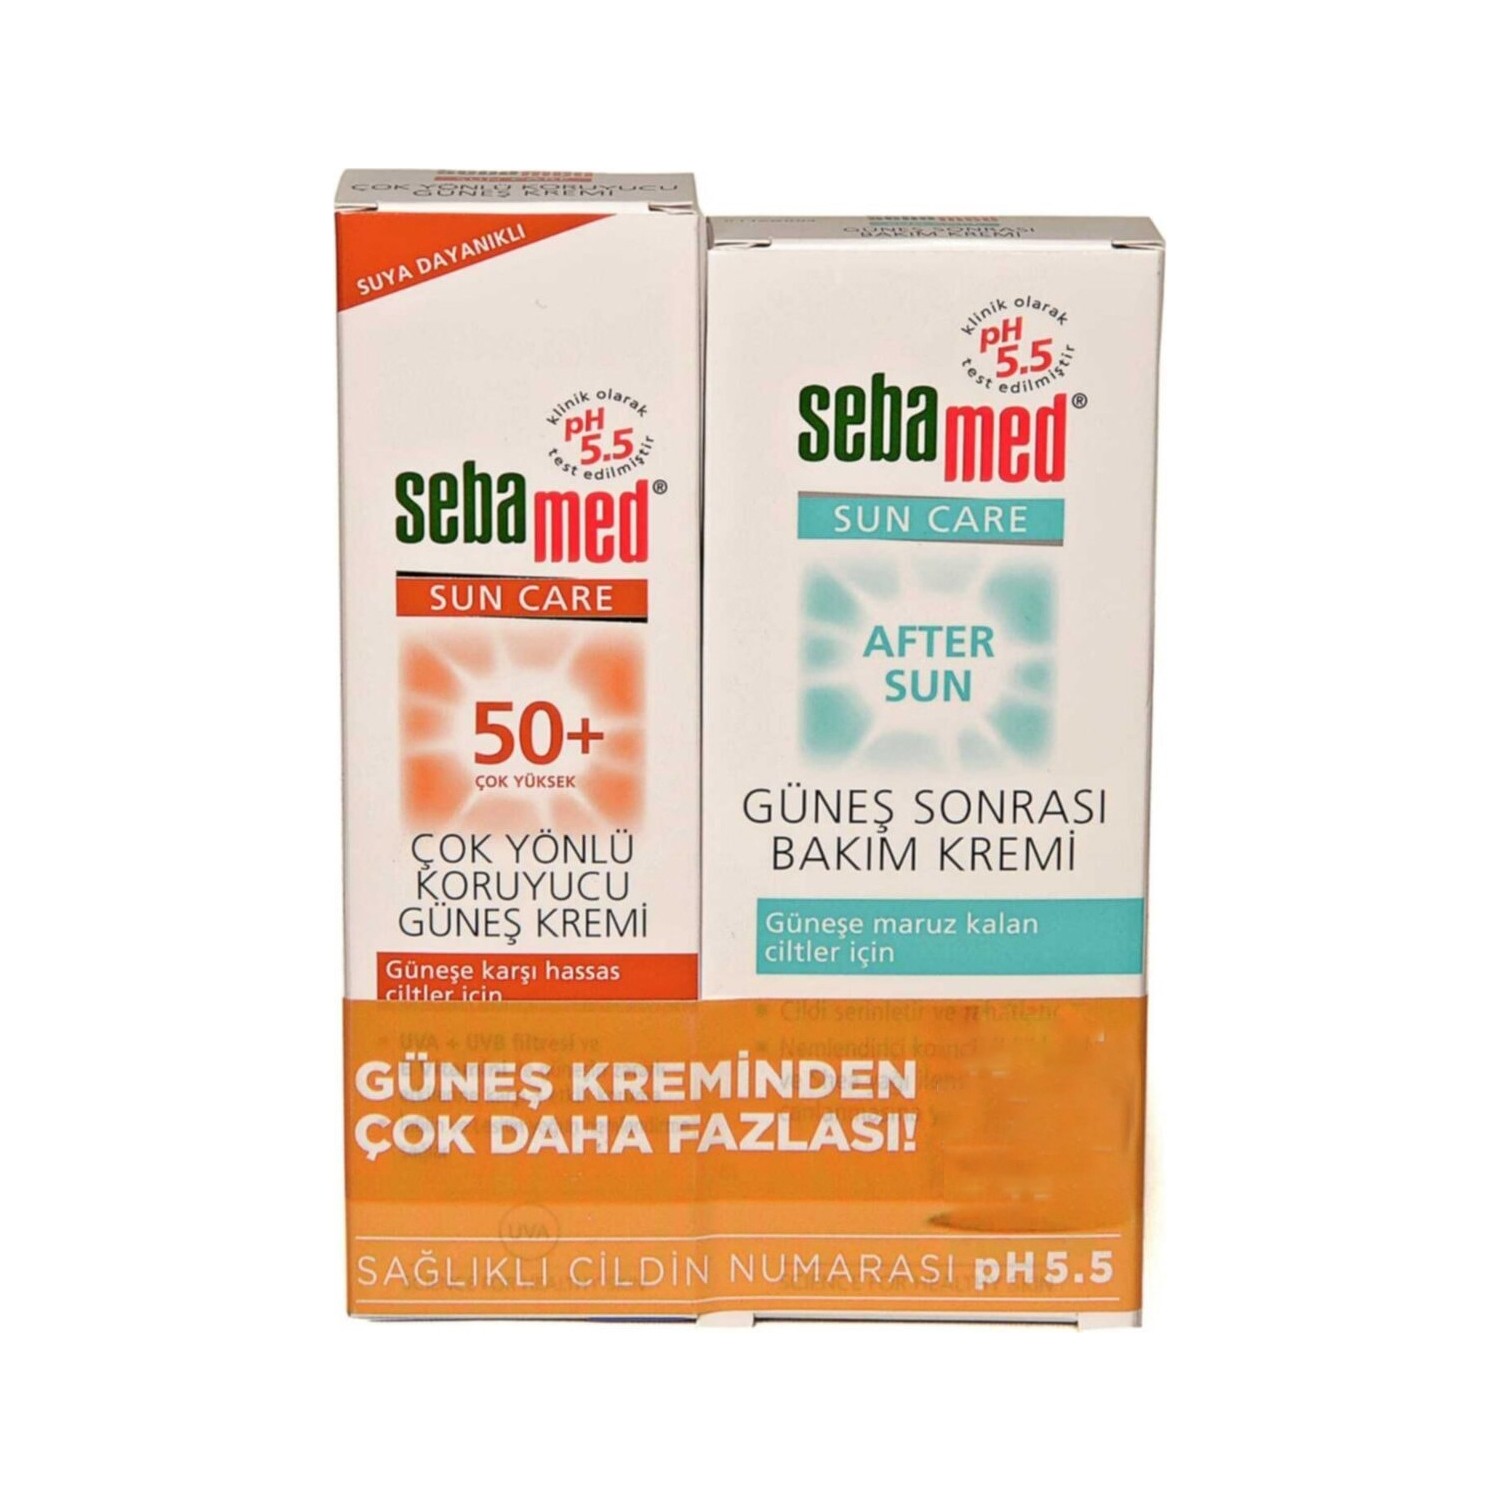 Солнцезащитный крем Sebamed Sun Care SPF 50+, 100 мл цена и фото